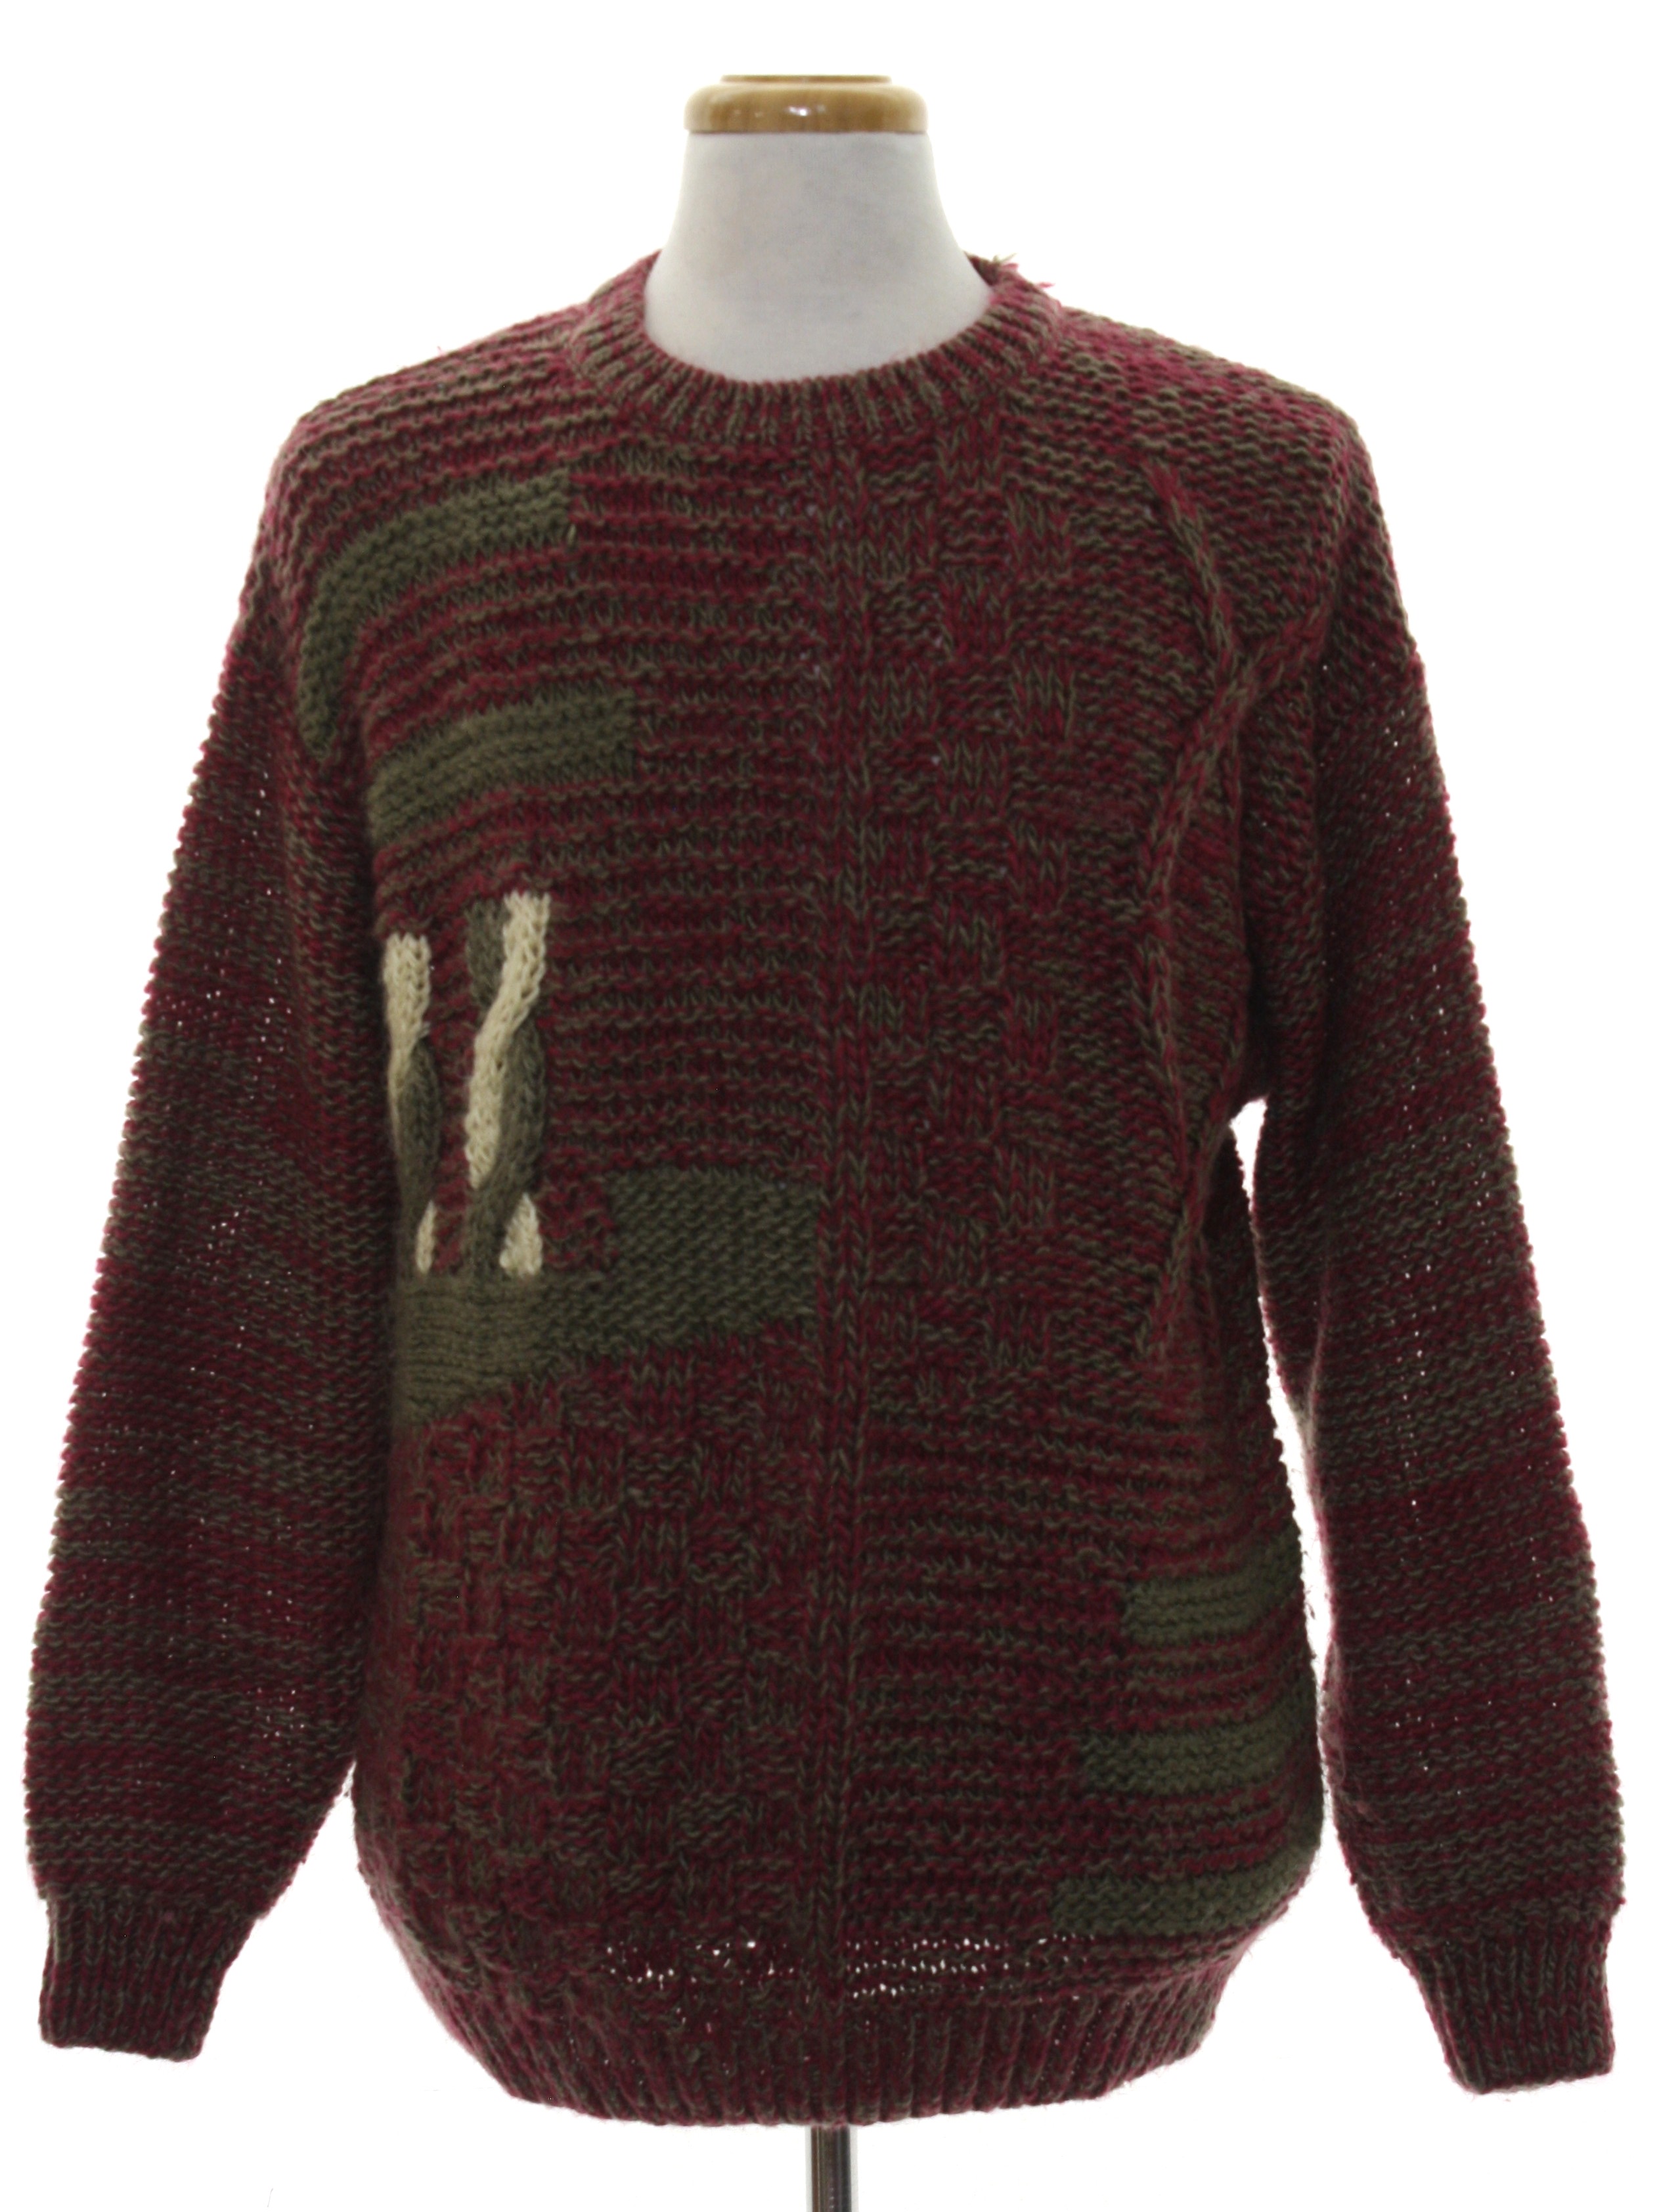 Retro 1980's Sweater (Peter England) : 80s -Peter England- Mens heather ...